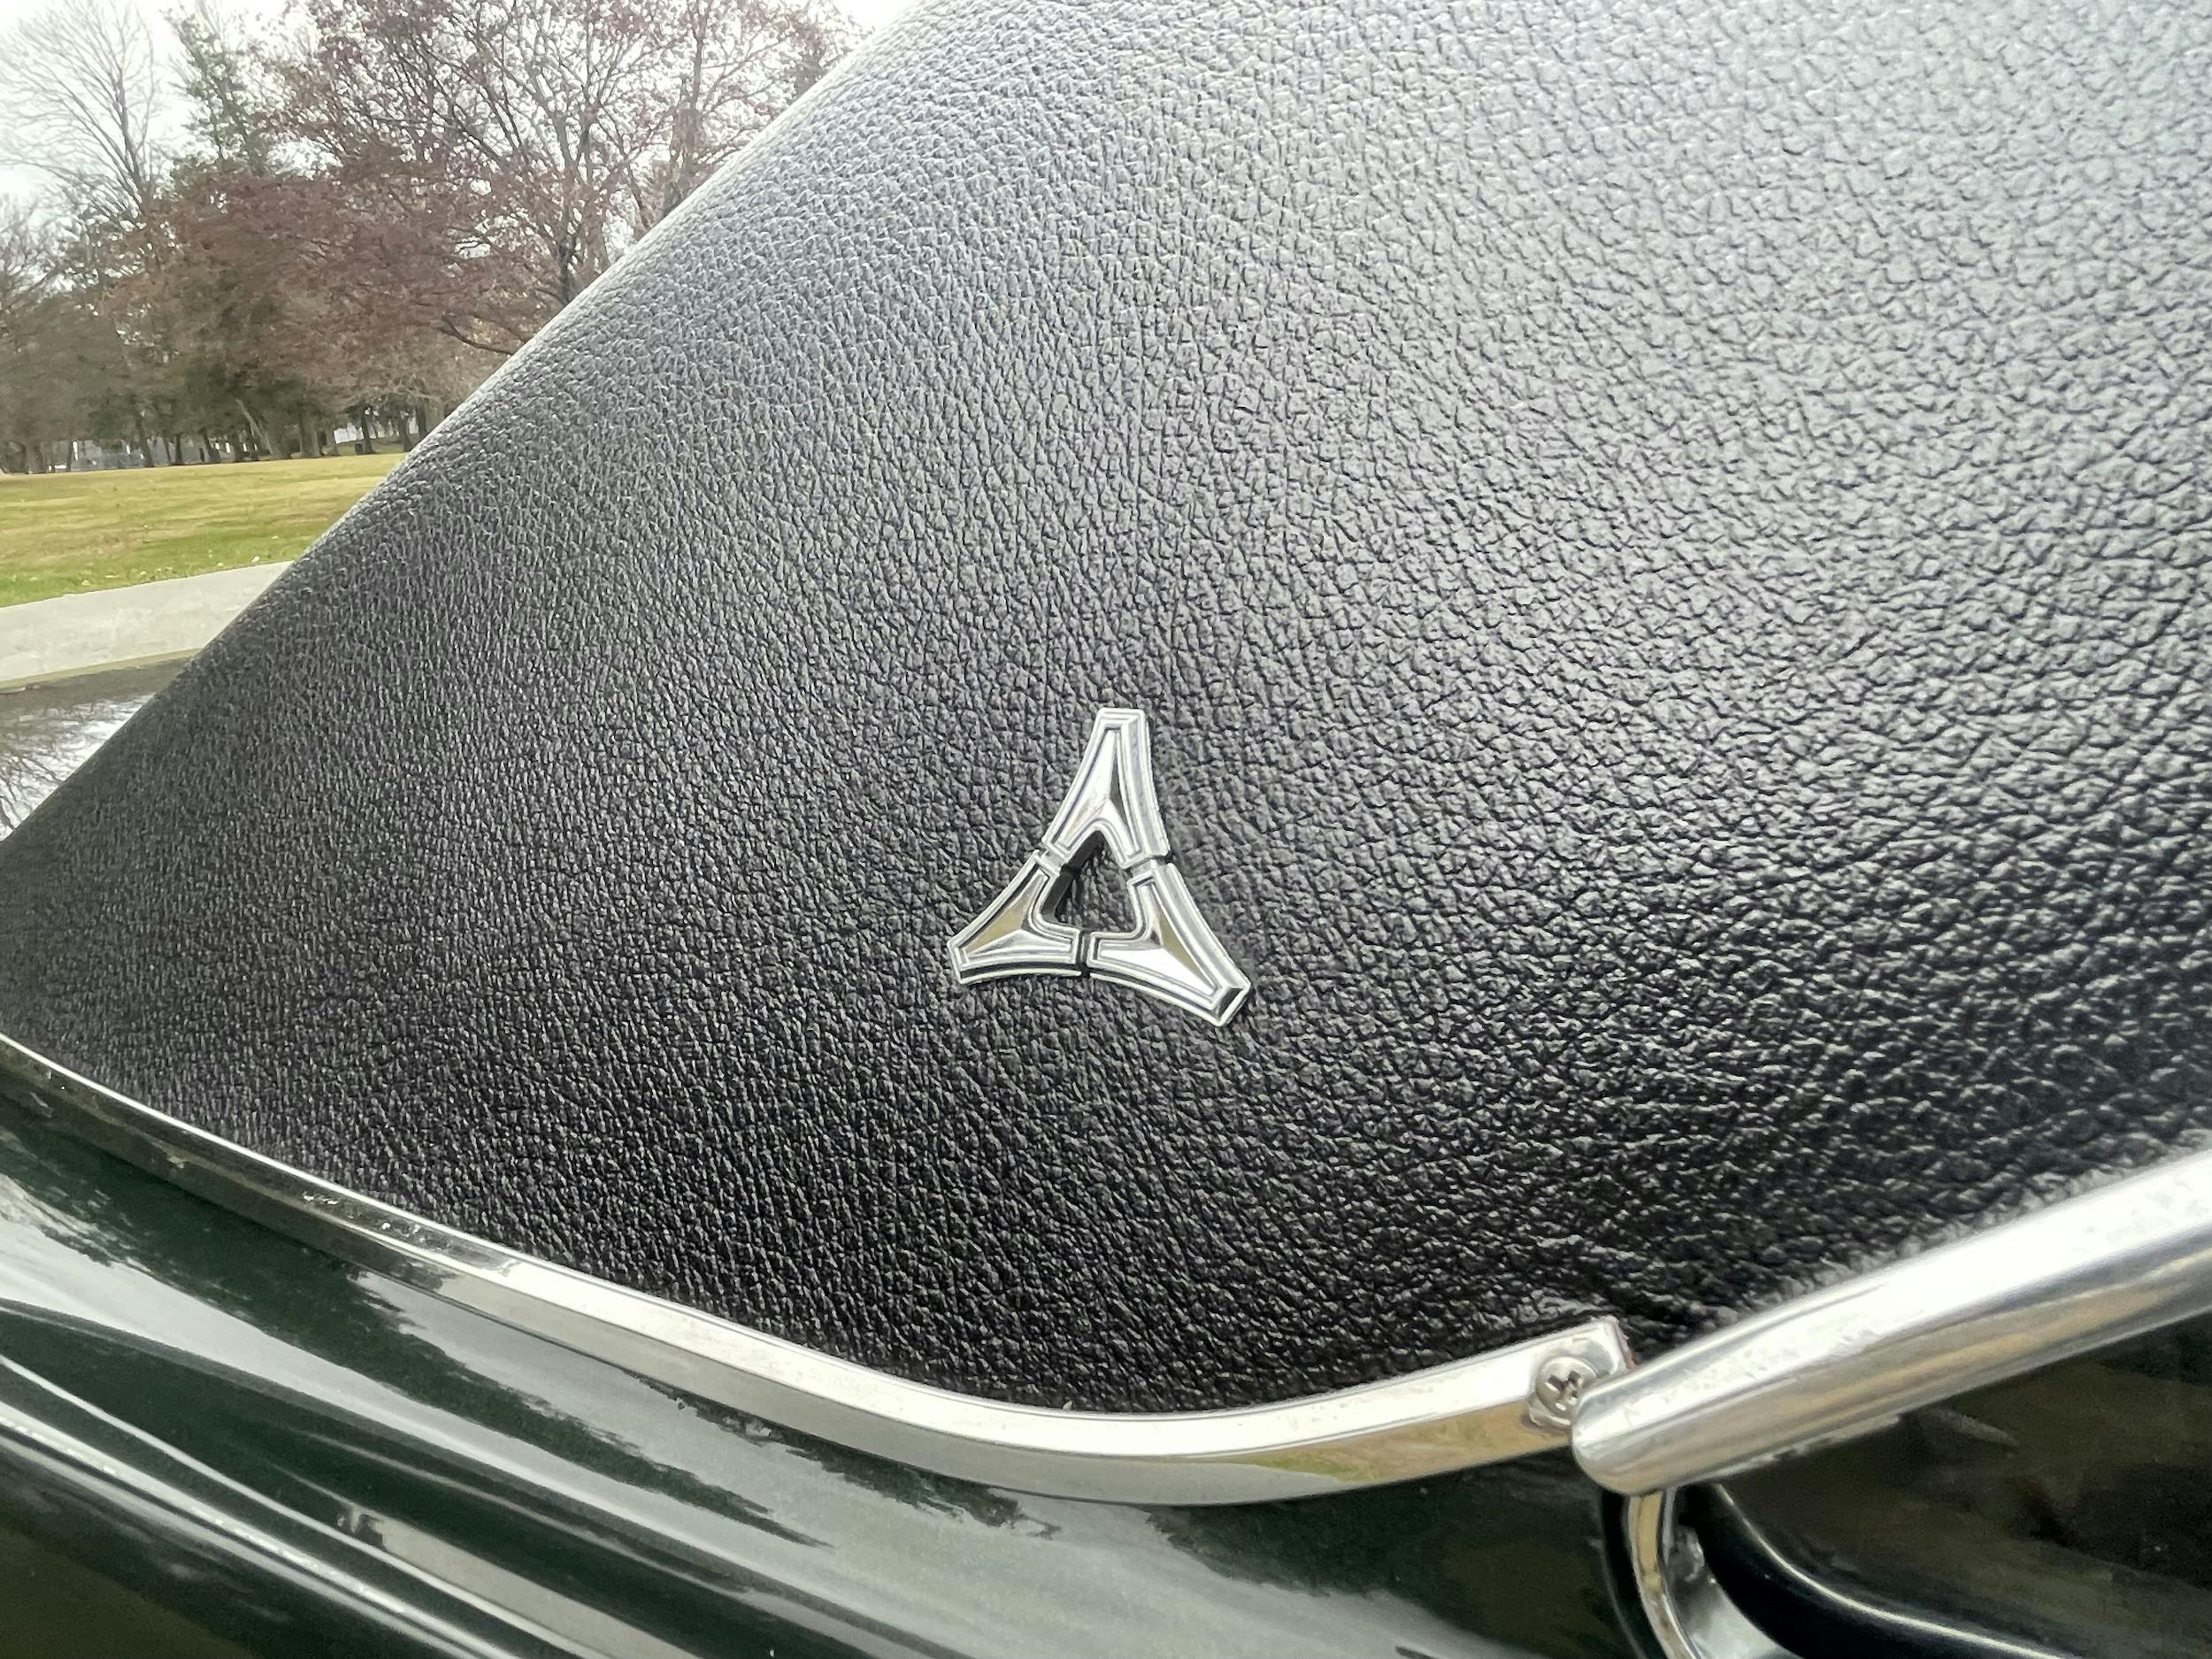 1968 Dodge Dart GT top badge detail